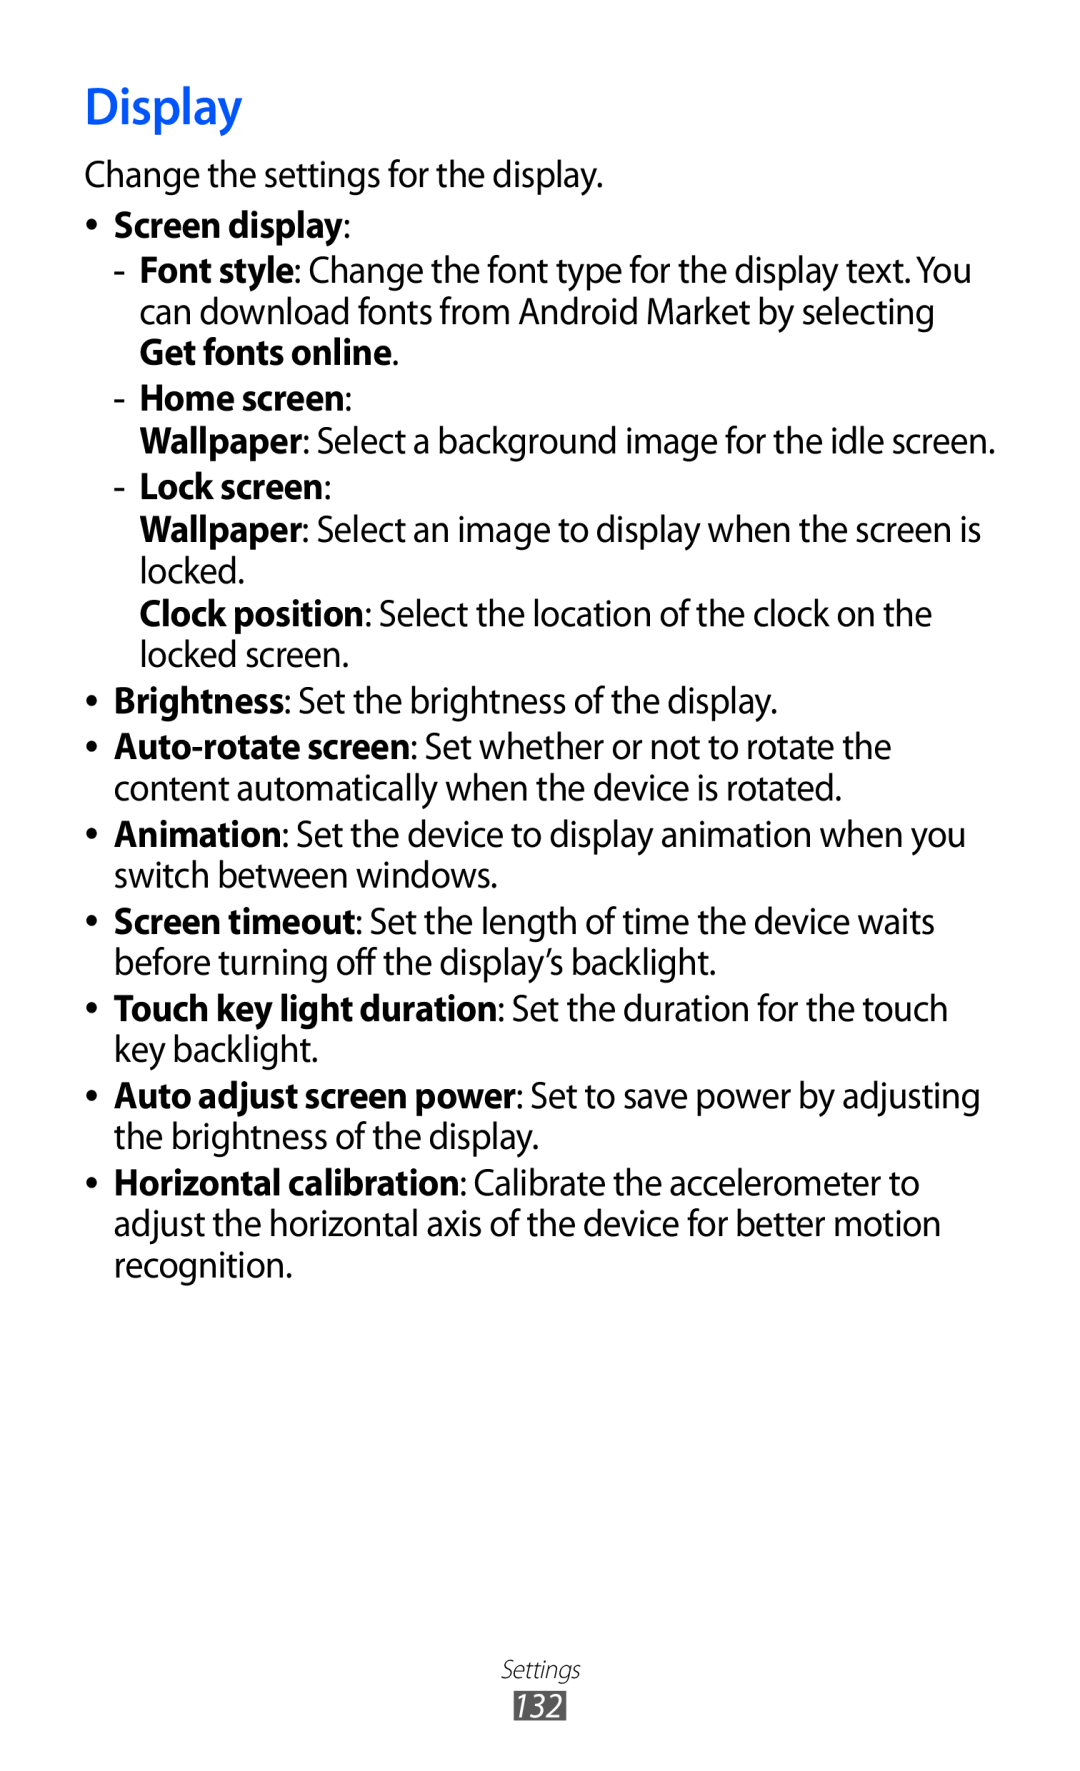 Samsung GT-I9070 user manual Display, Screen display, Home screen, Lock screen 